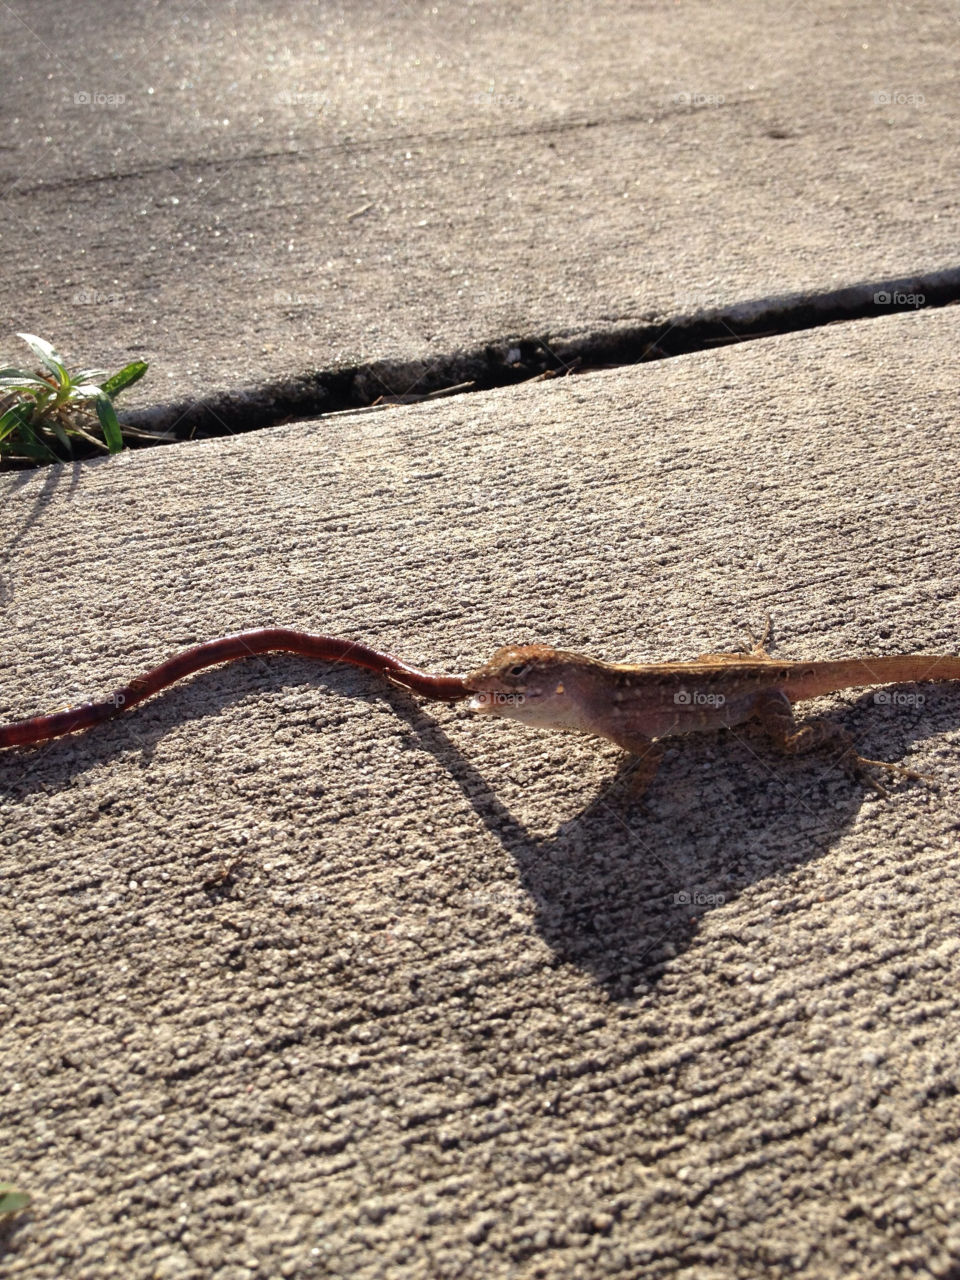 lizard sidewalk attack feast by ahhhe